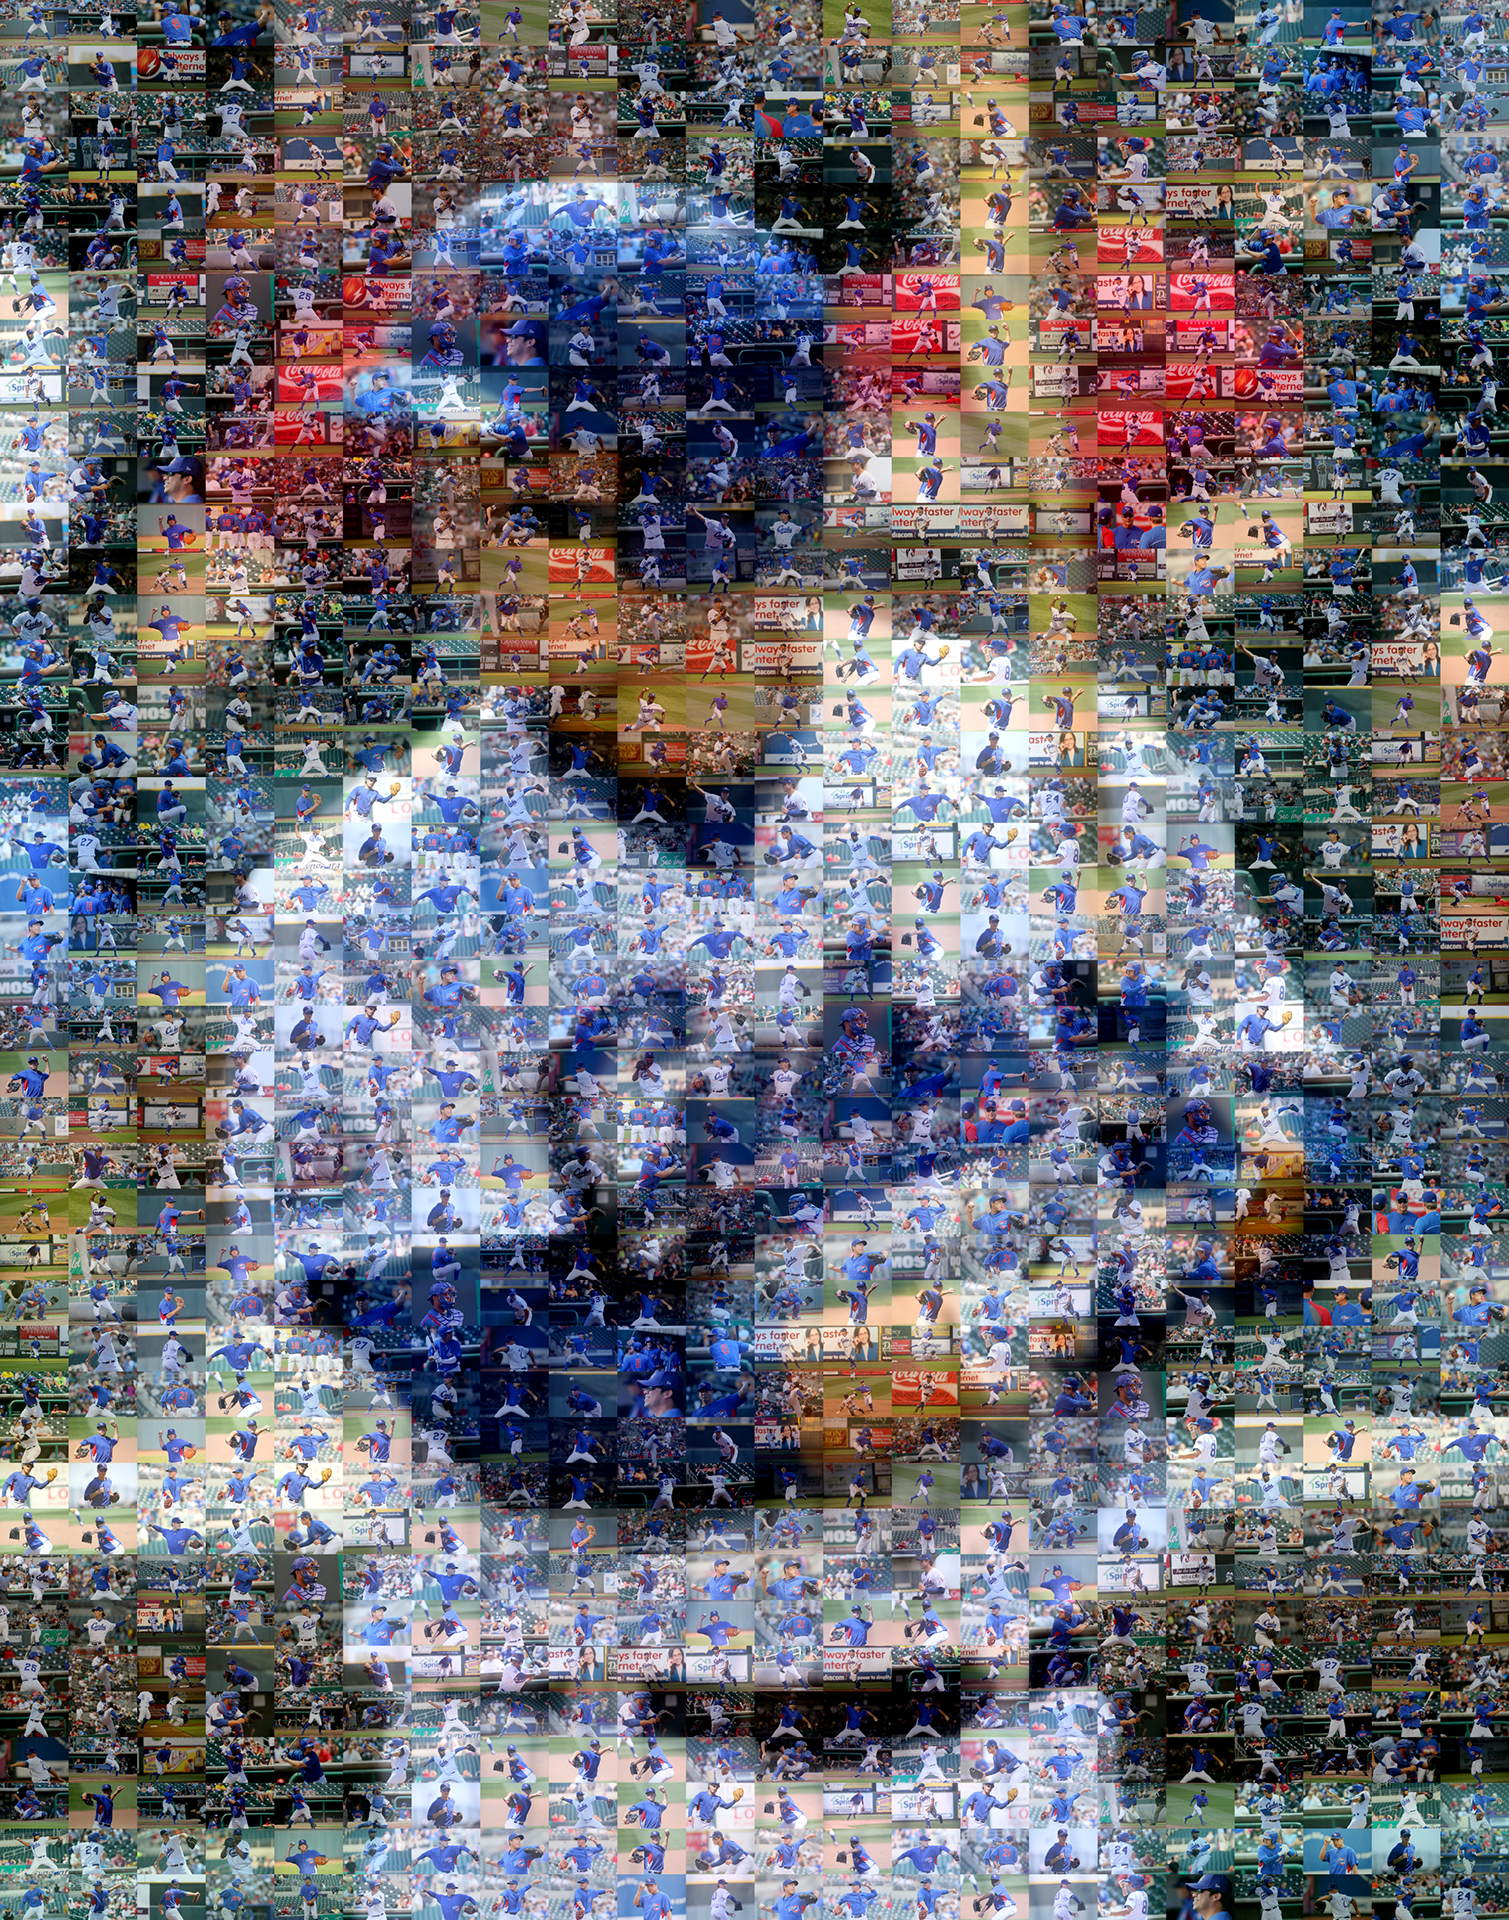 photo mosaic created using 203 photos of the Iowa Cubs